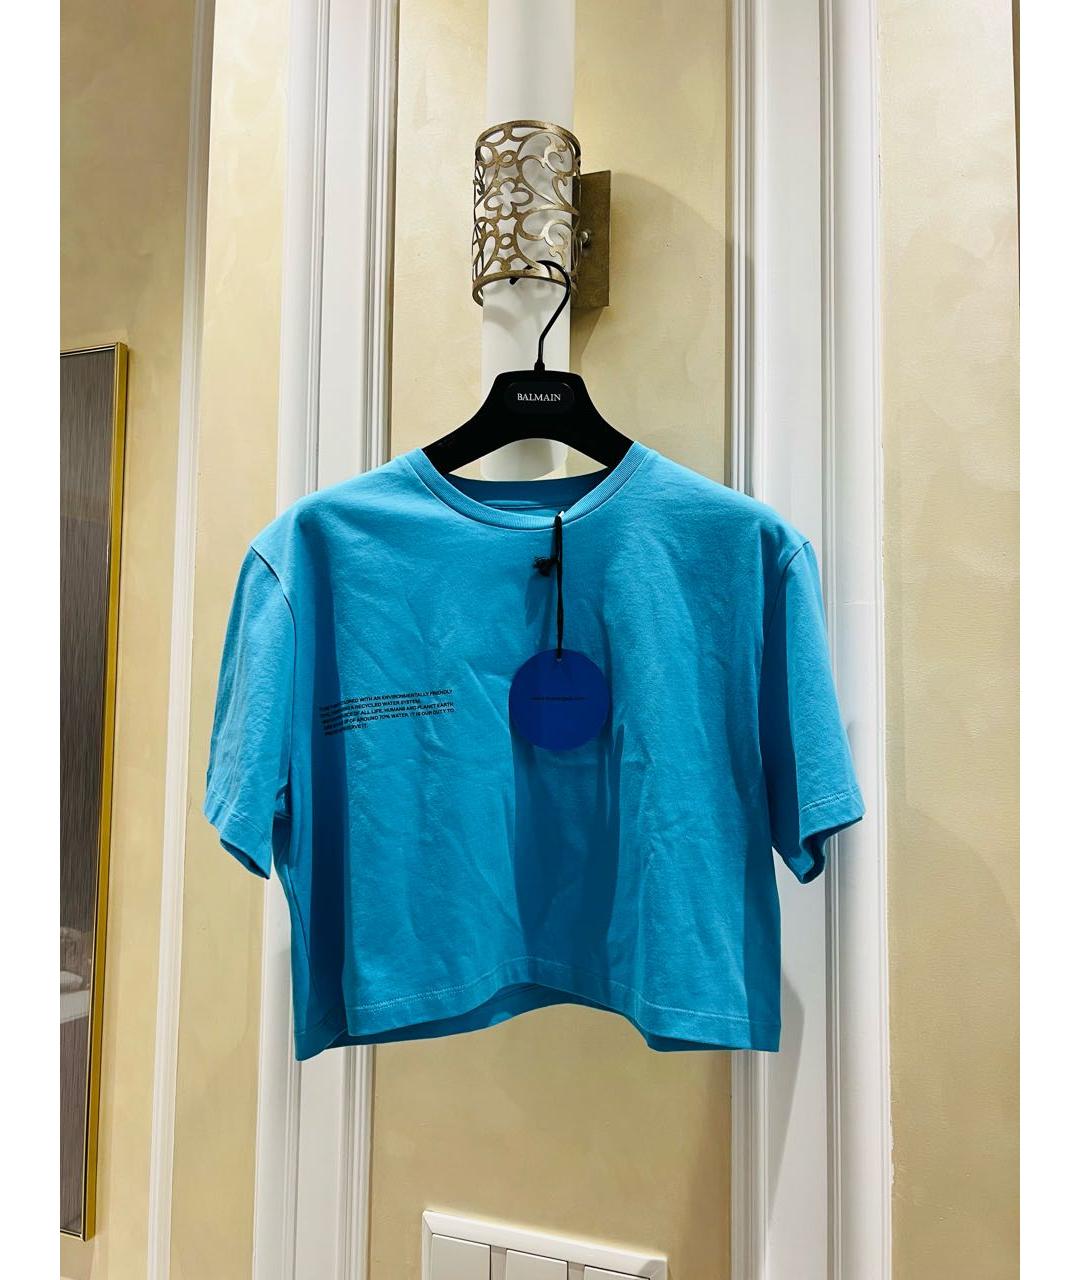 THE PANGAIA Голубая хлопковая футболка, фото 4